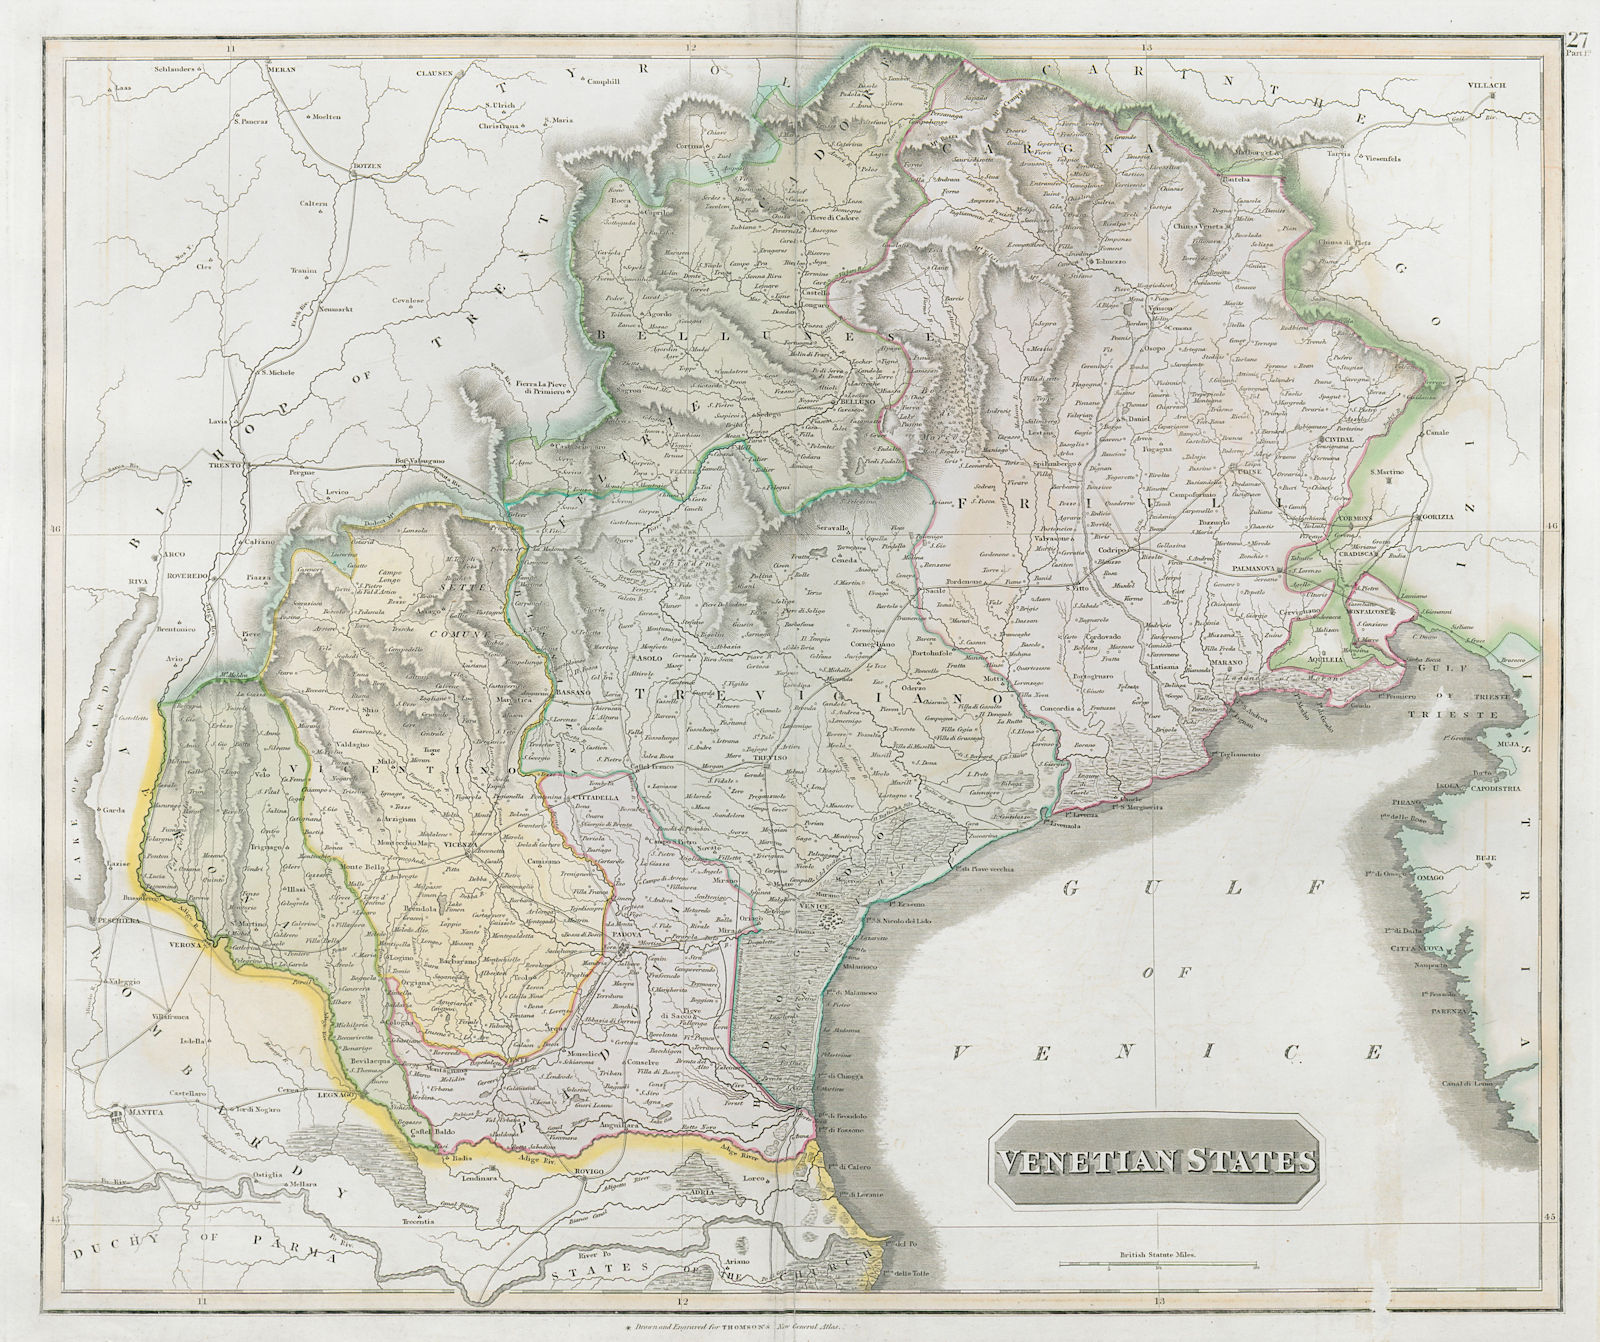 "Venetian States". Republic of Venice, Italy. Veneto & Friuli. THOMSON 1830 map